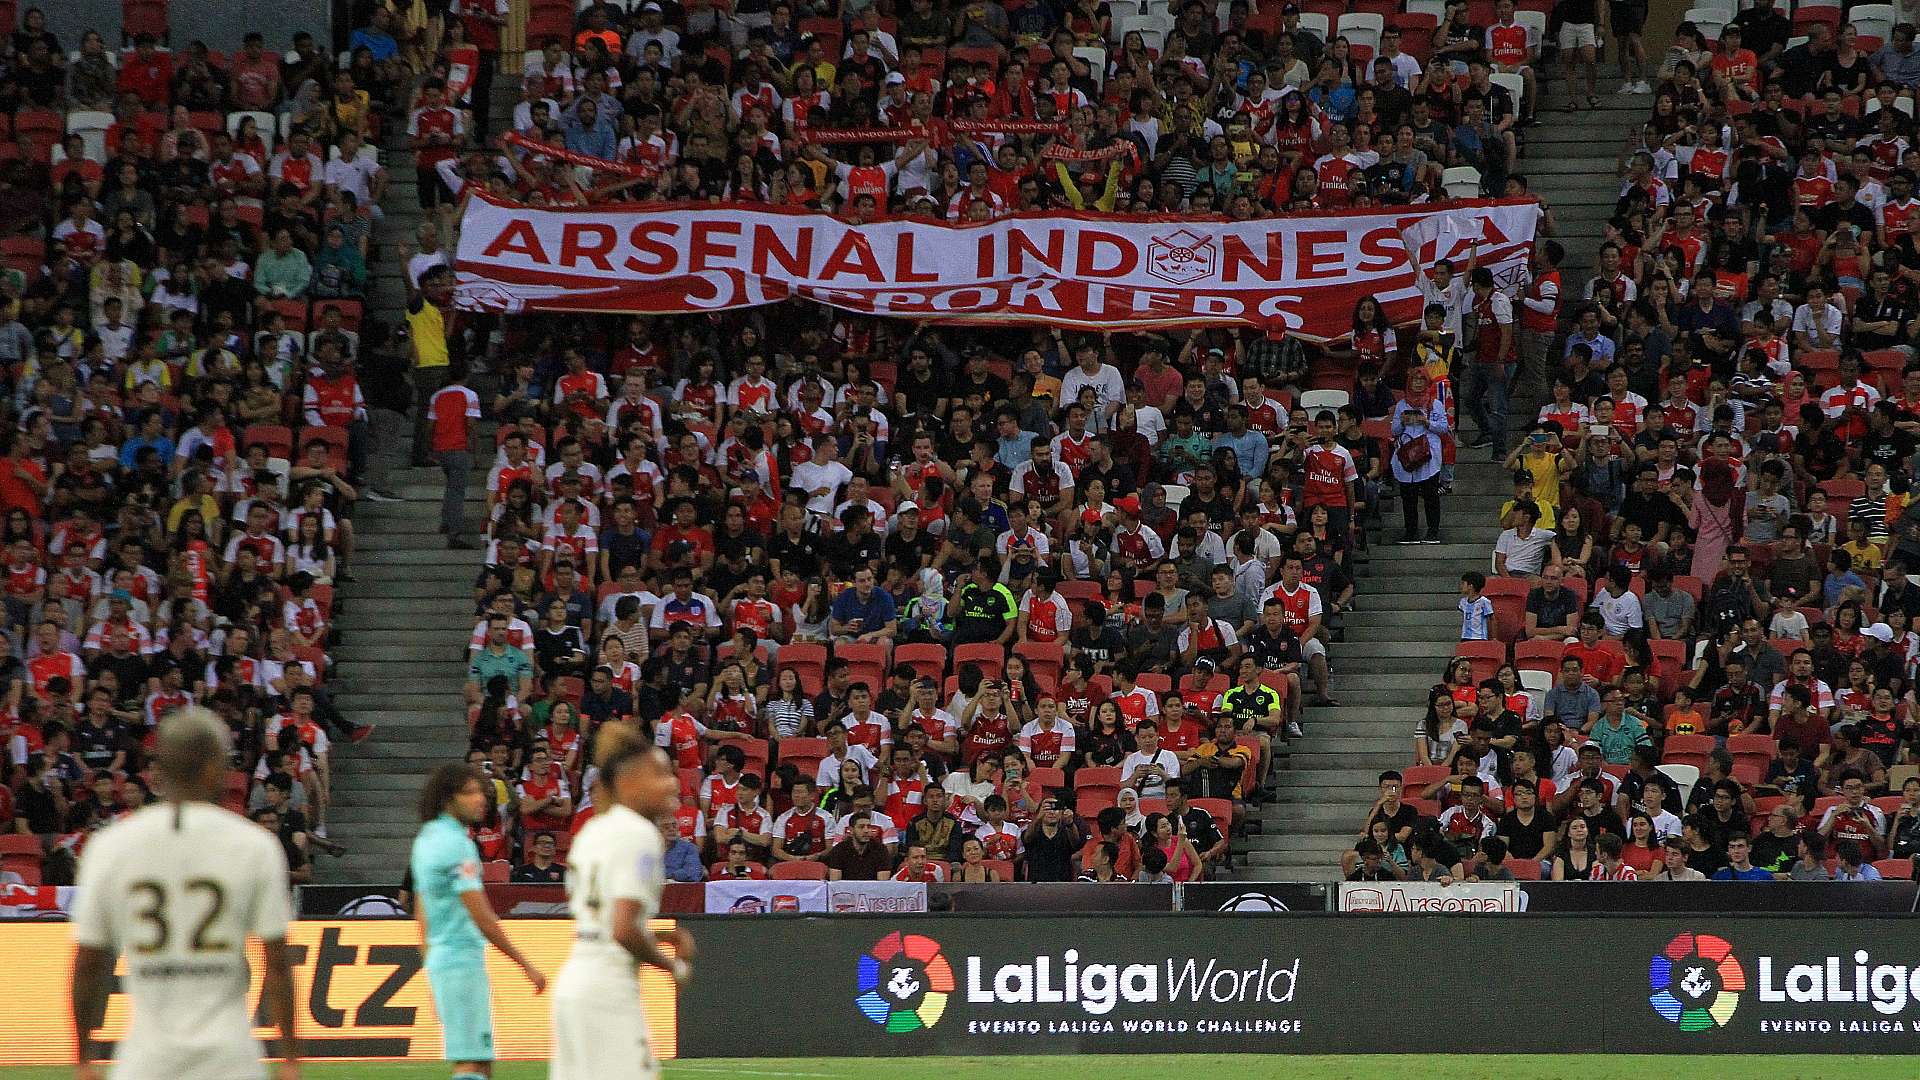 Arsenal & PSG Fans